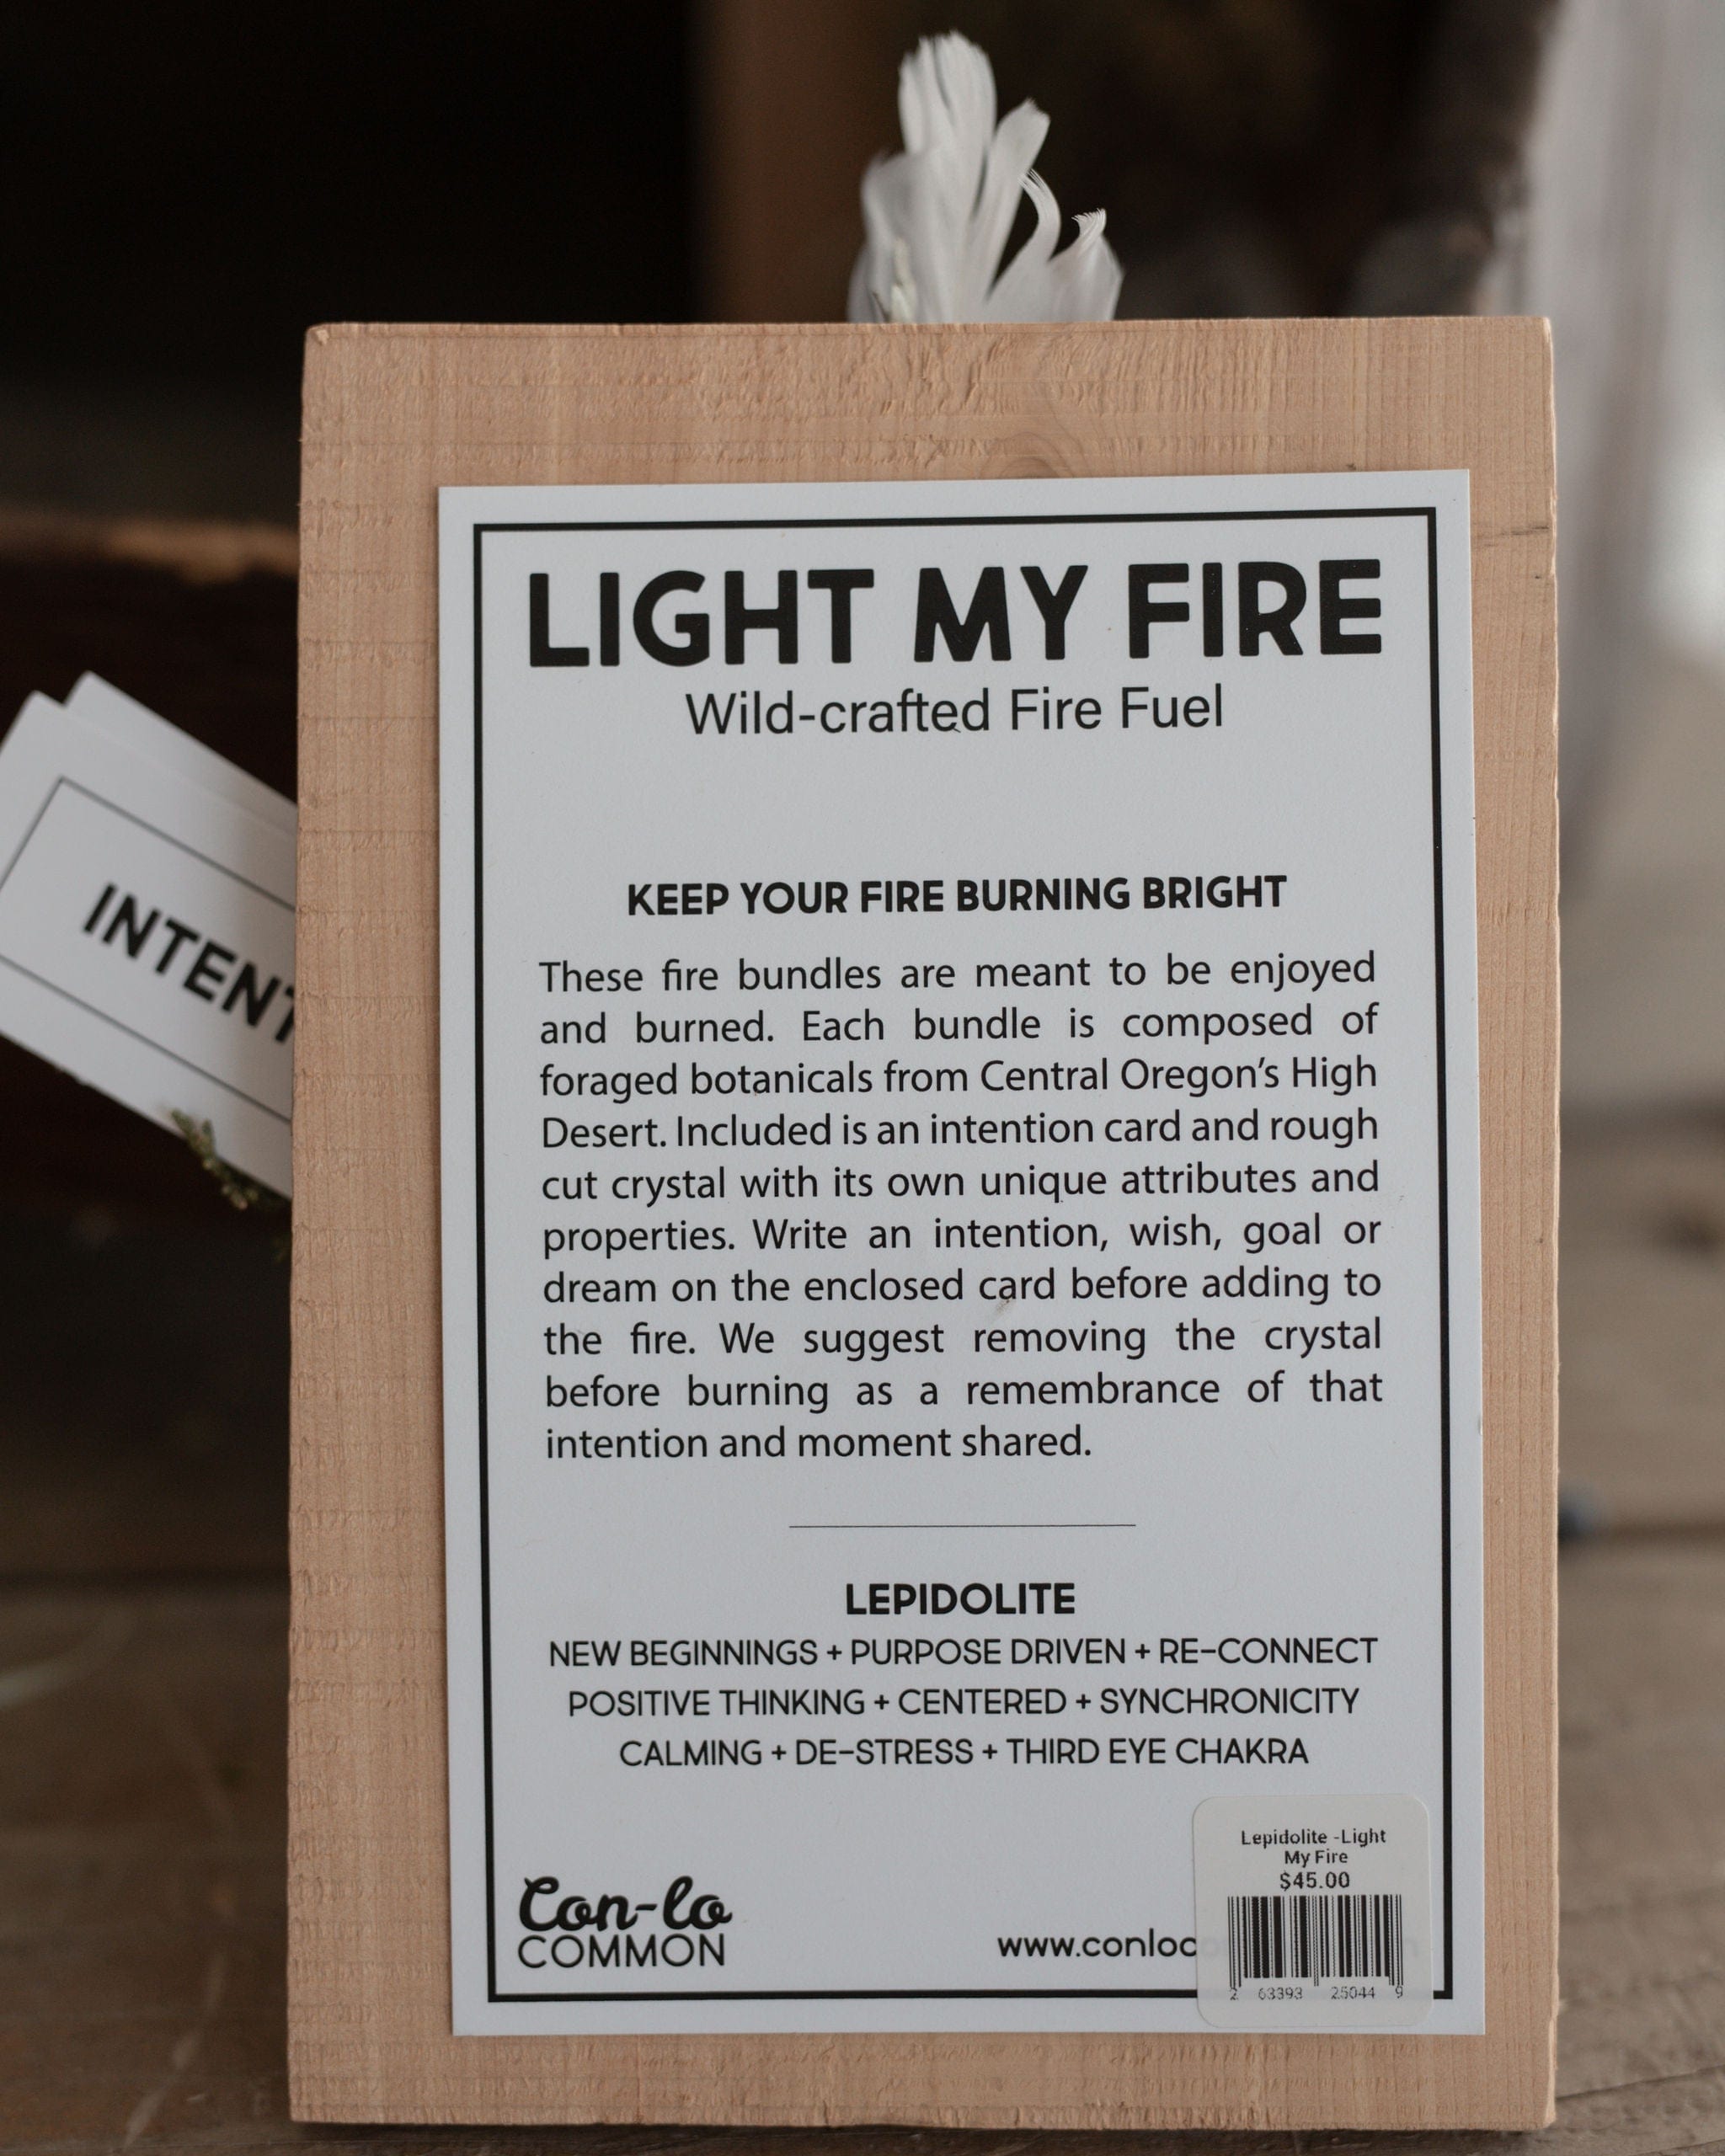 Con-lo COMMON Lepidolite - Light My Fire